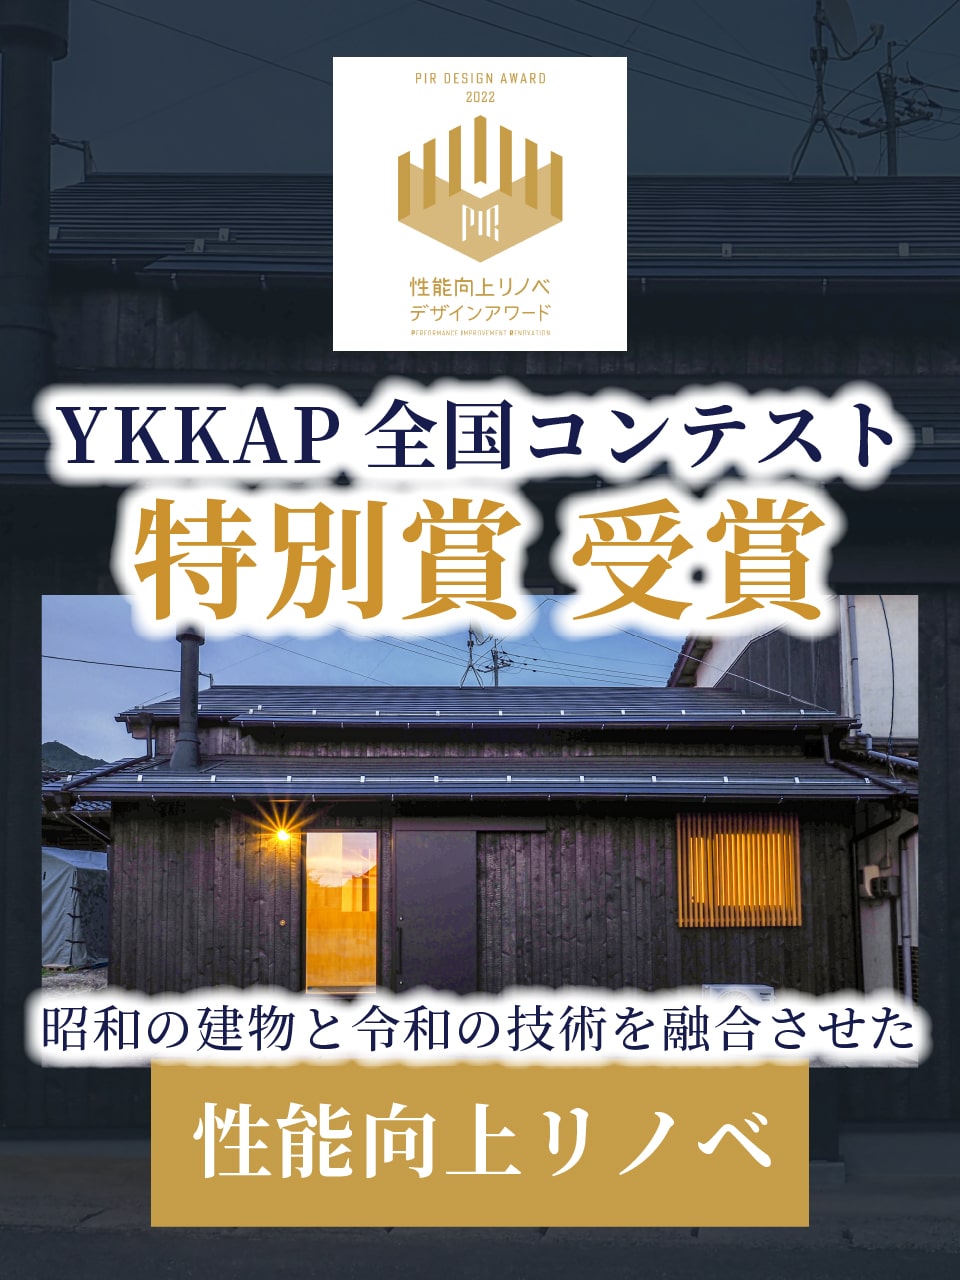 YKKAP全国コンテスト特別賞受賞